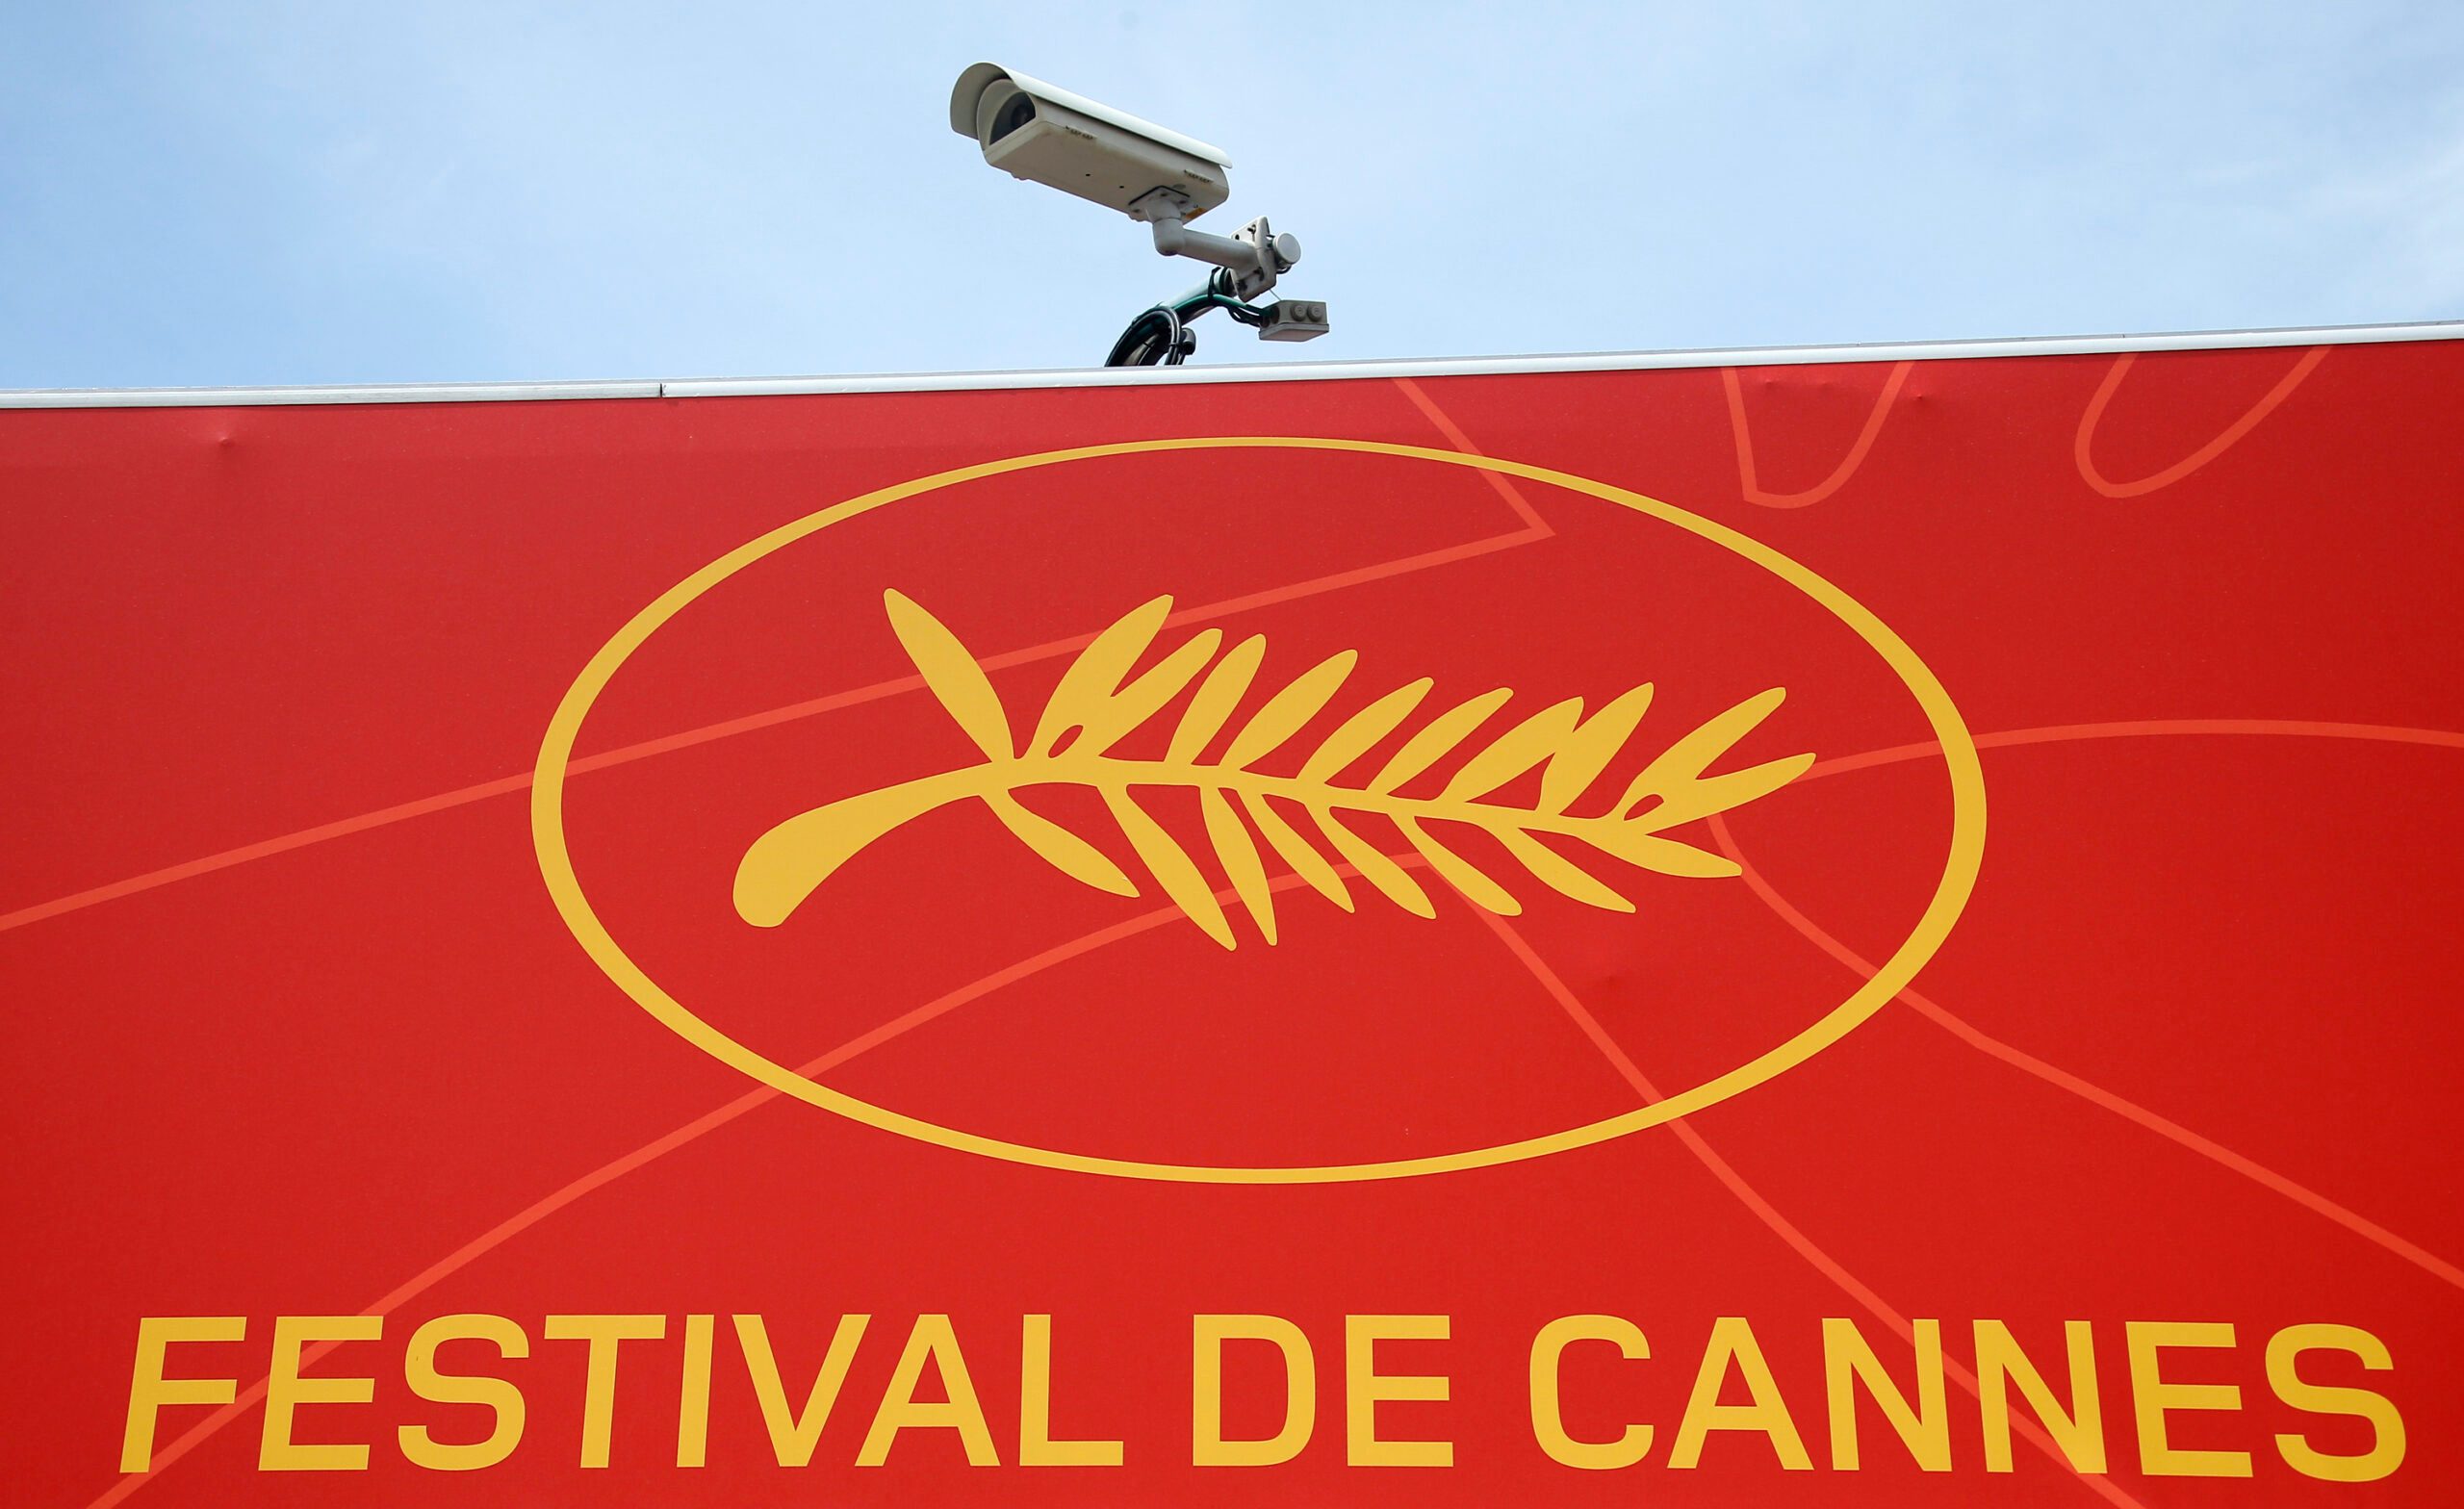 Fake terror attack on Cannes film stars’ hotel